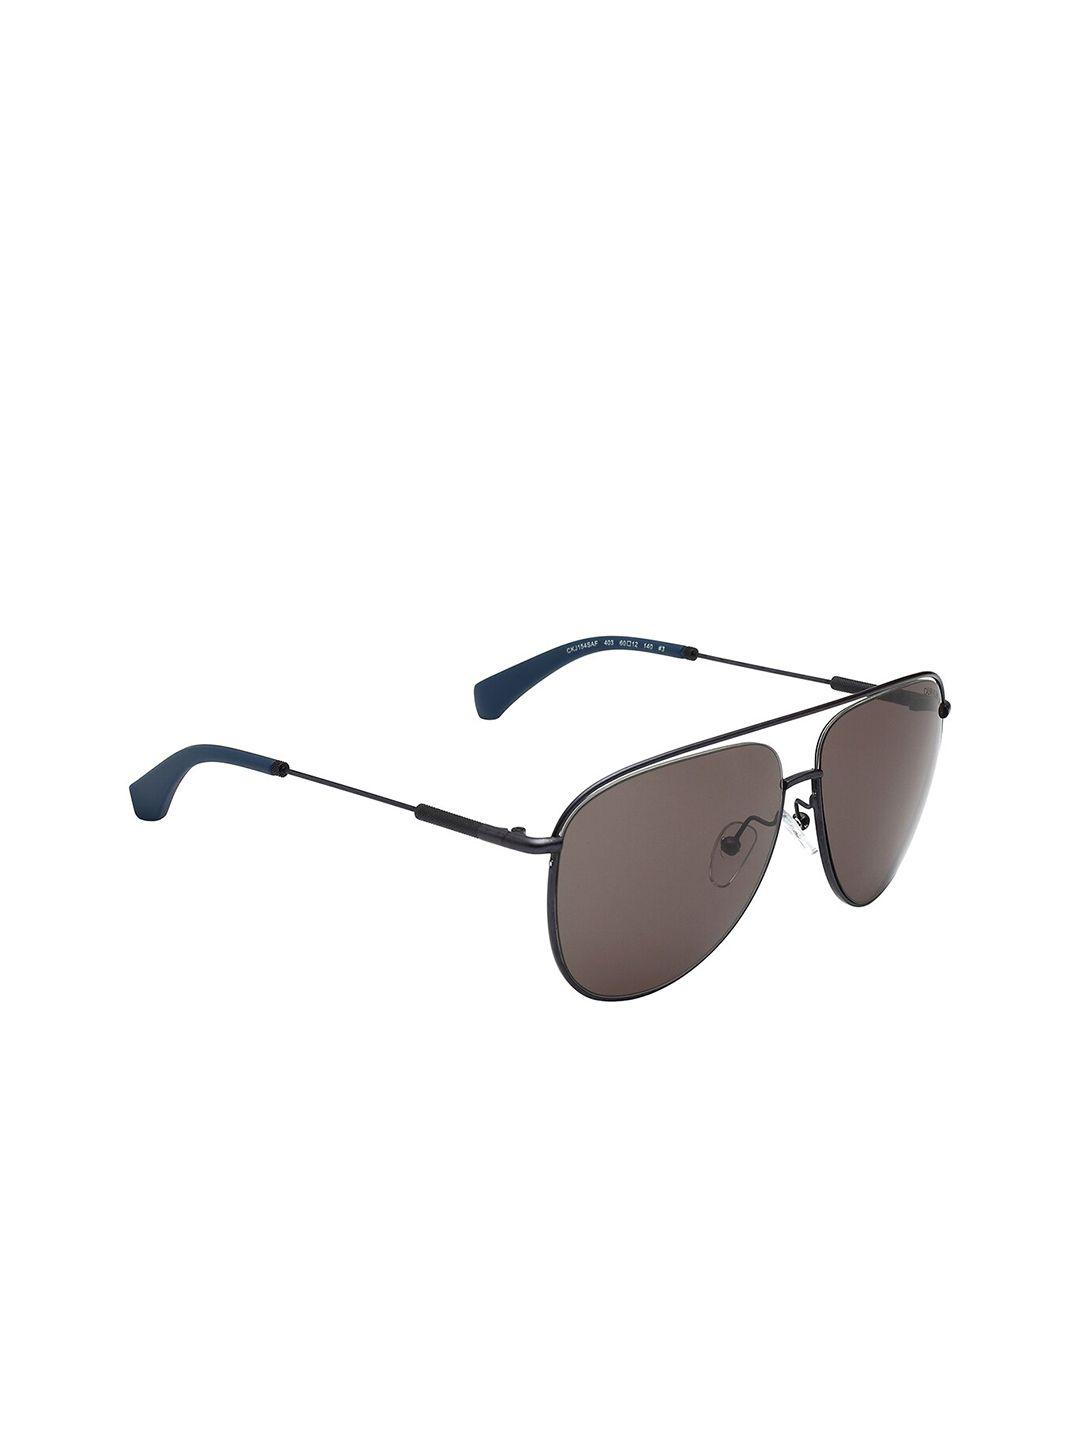 calvin-klein-unisex-aviator-sunglasses-with-uv-protected-lens-ckj-154af-403-60-s